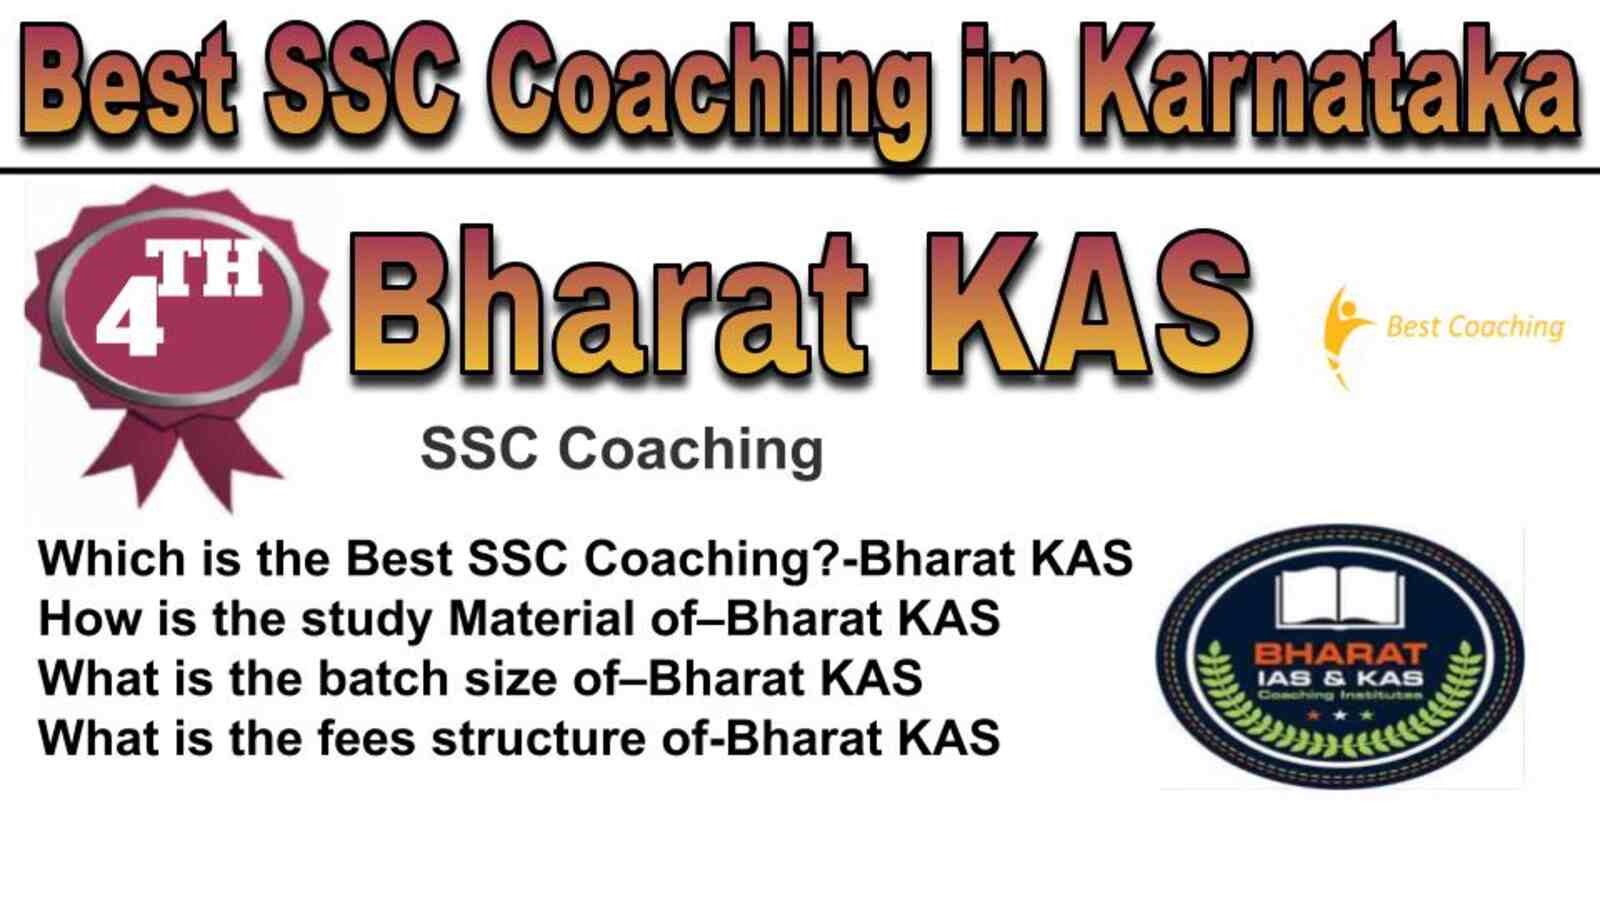 Rank 4 best SSC coaching in Karnataka